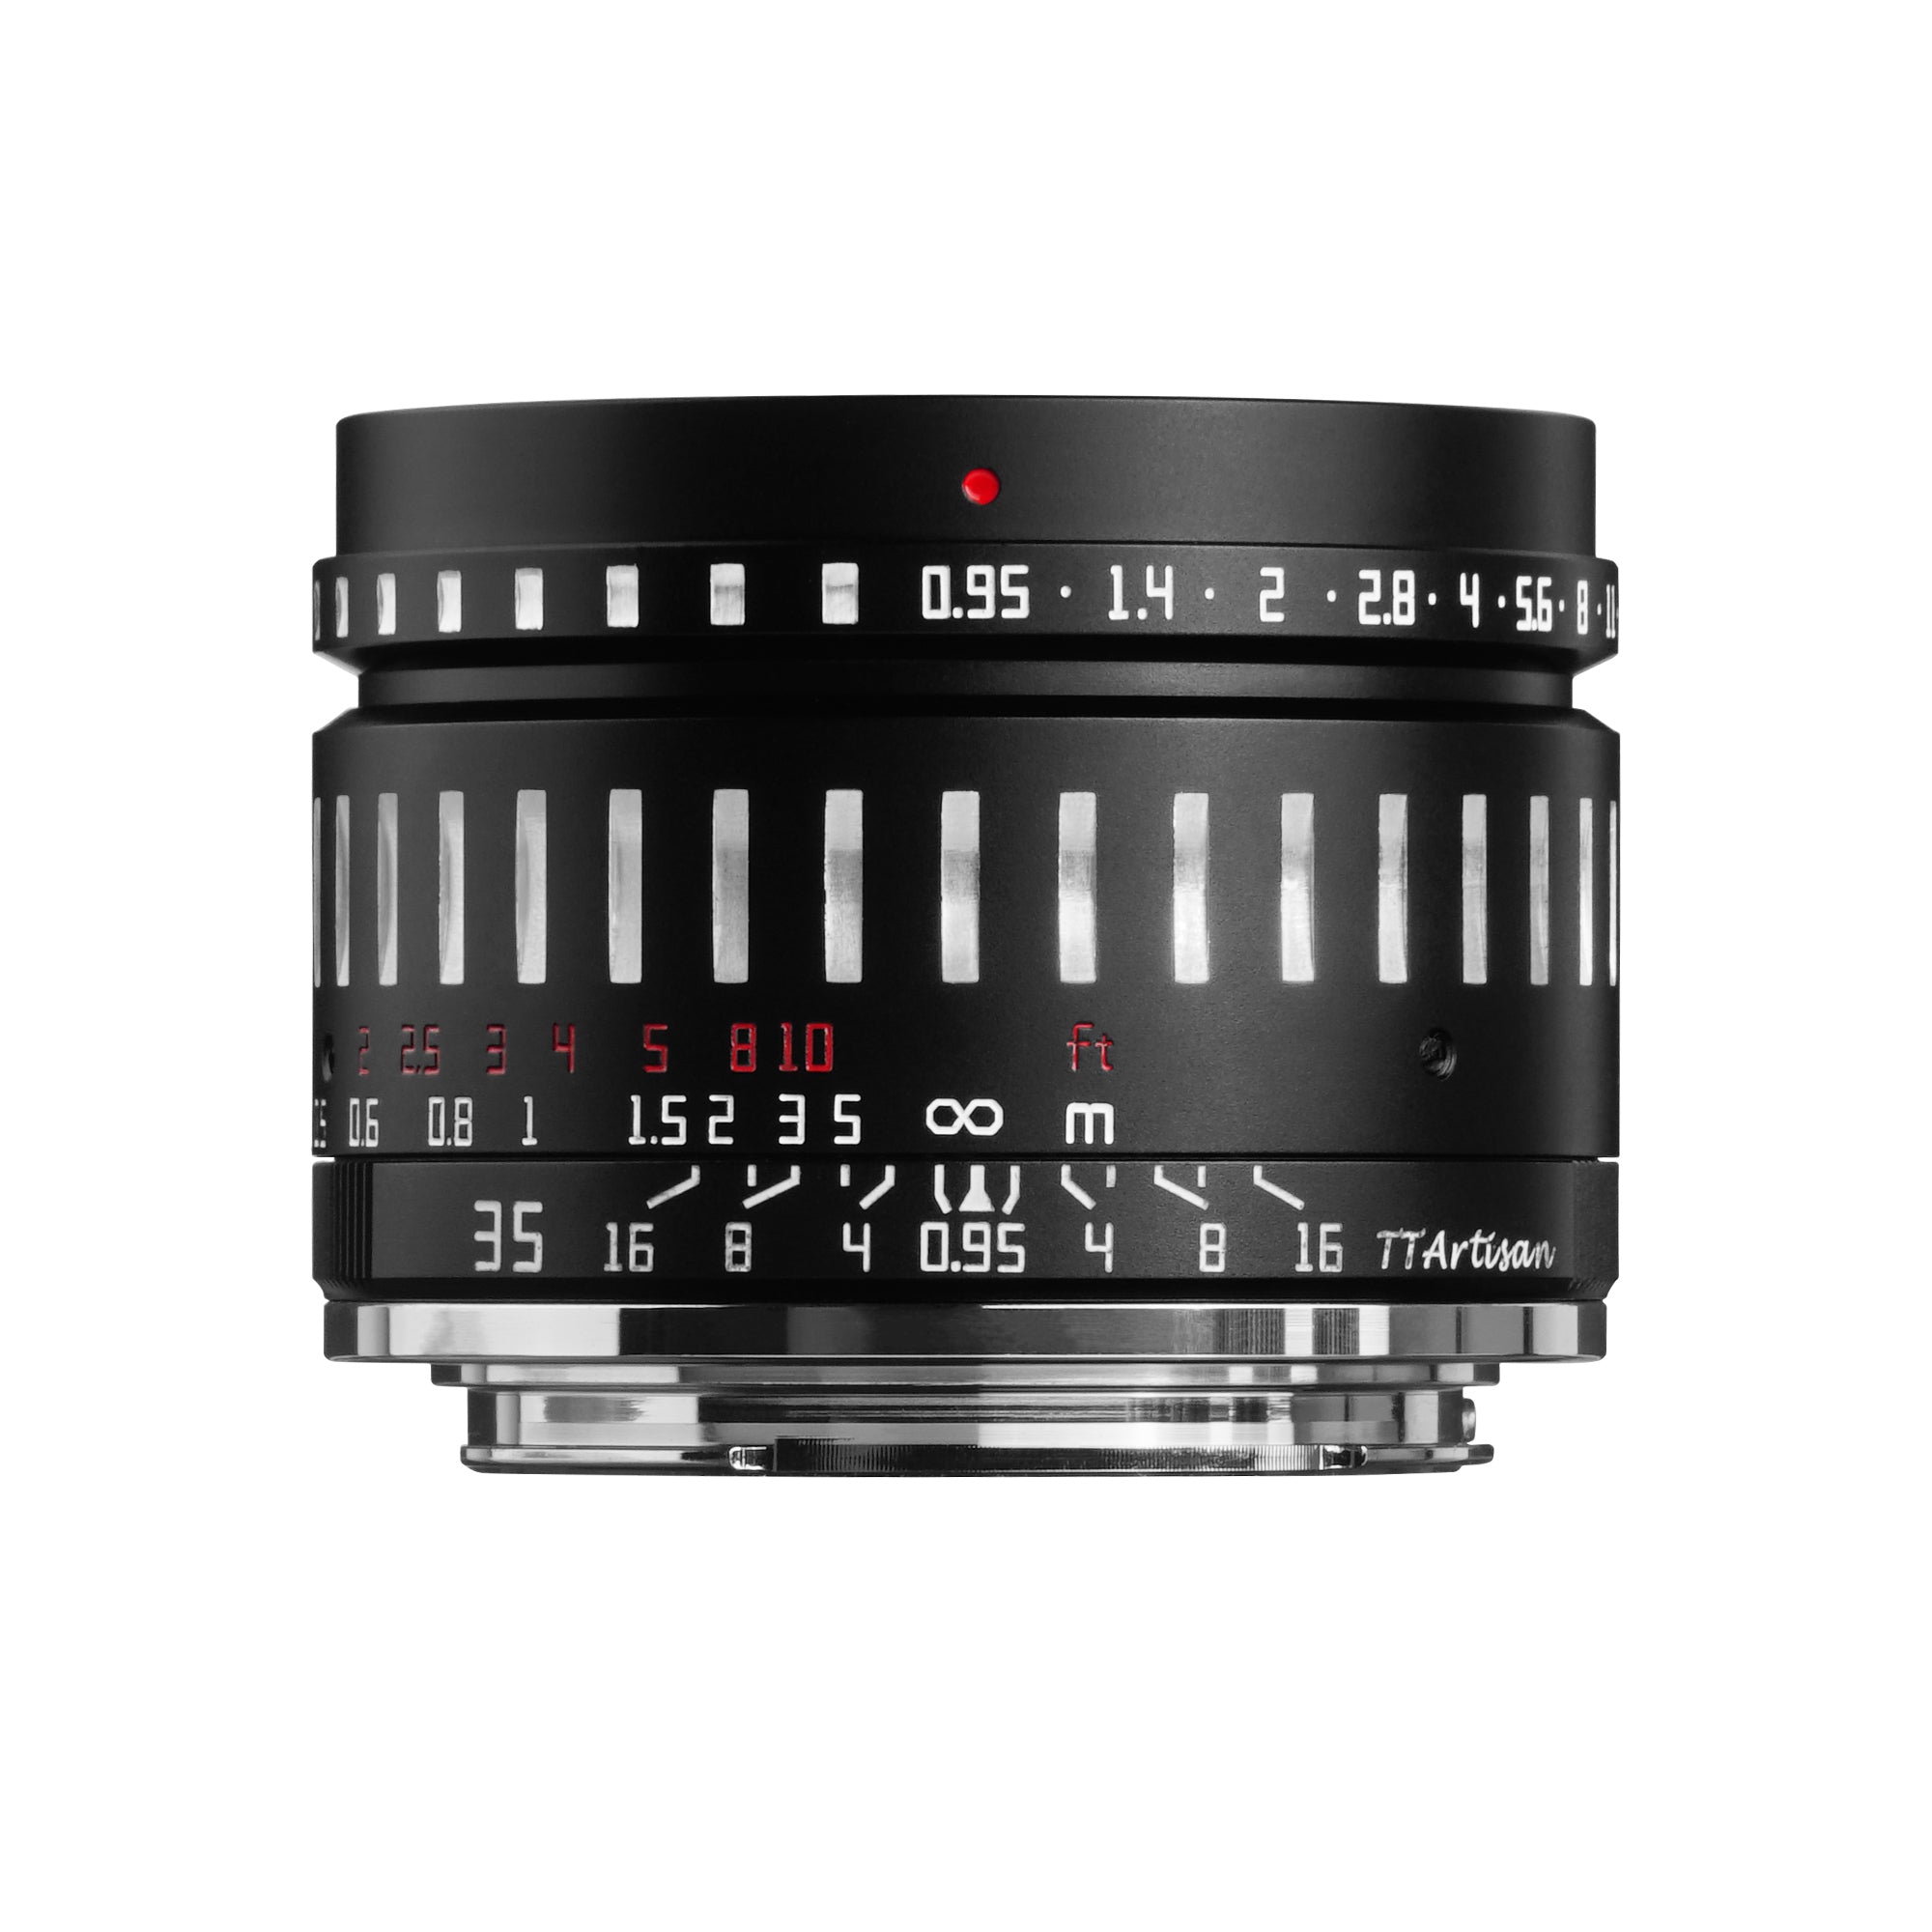 NEW RELEASE ! TTARTISAN 35mm f0.95 APSC, black - FASTEST APSC lens !